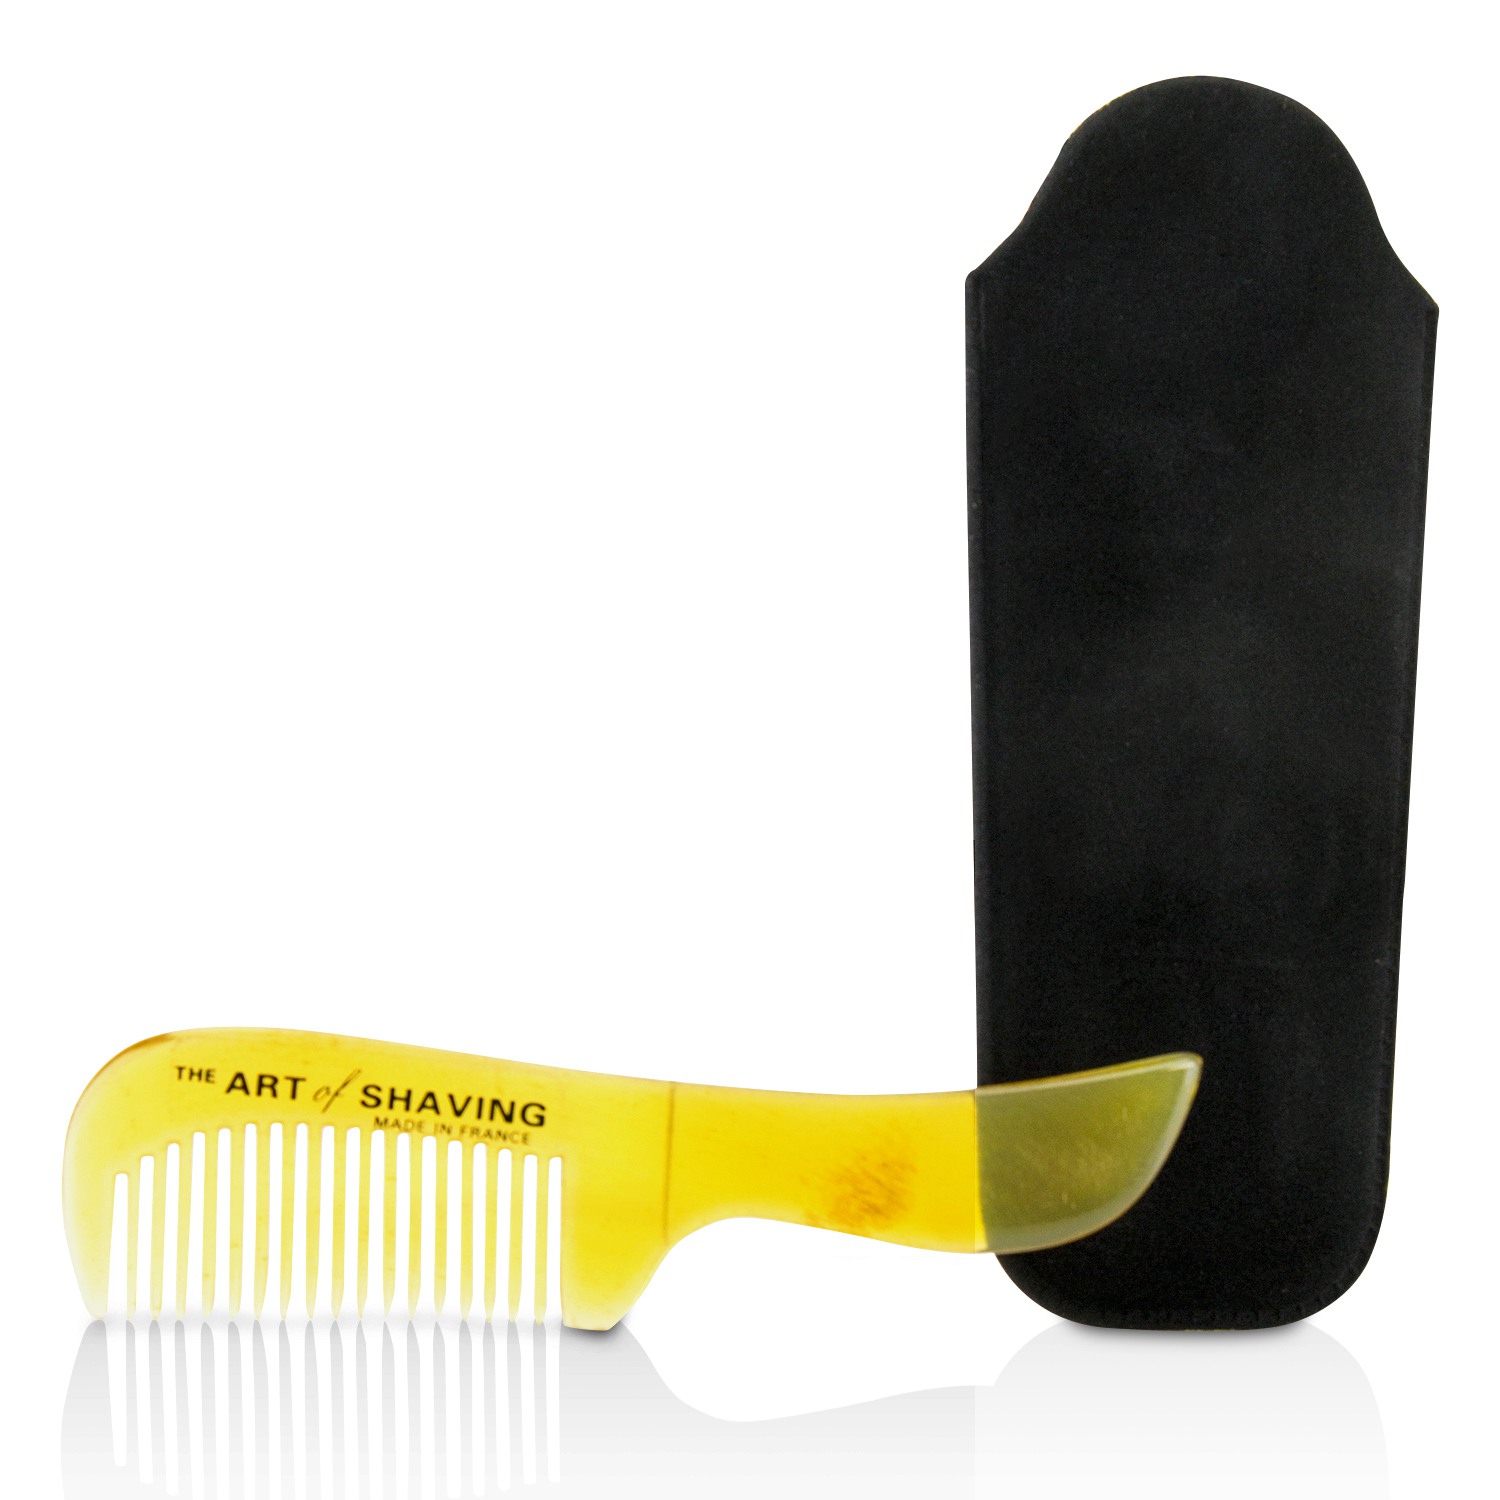 Horn Mustache Comb - Black Suedine The Art Of Shaving Image